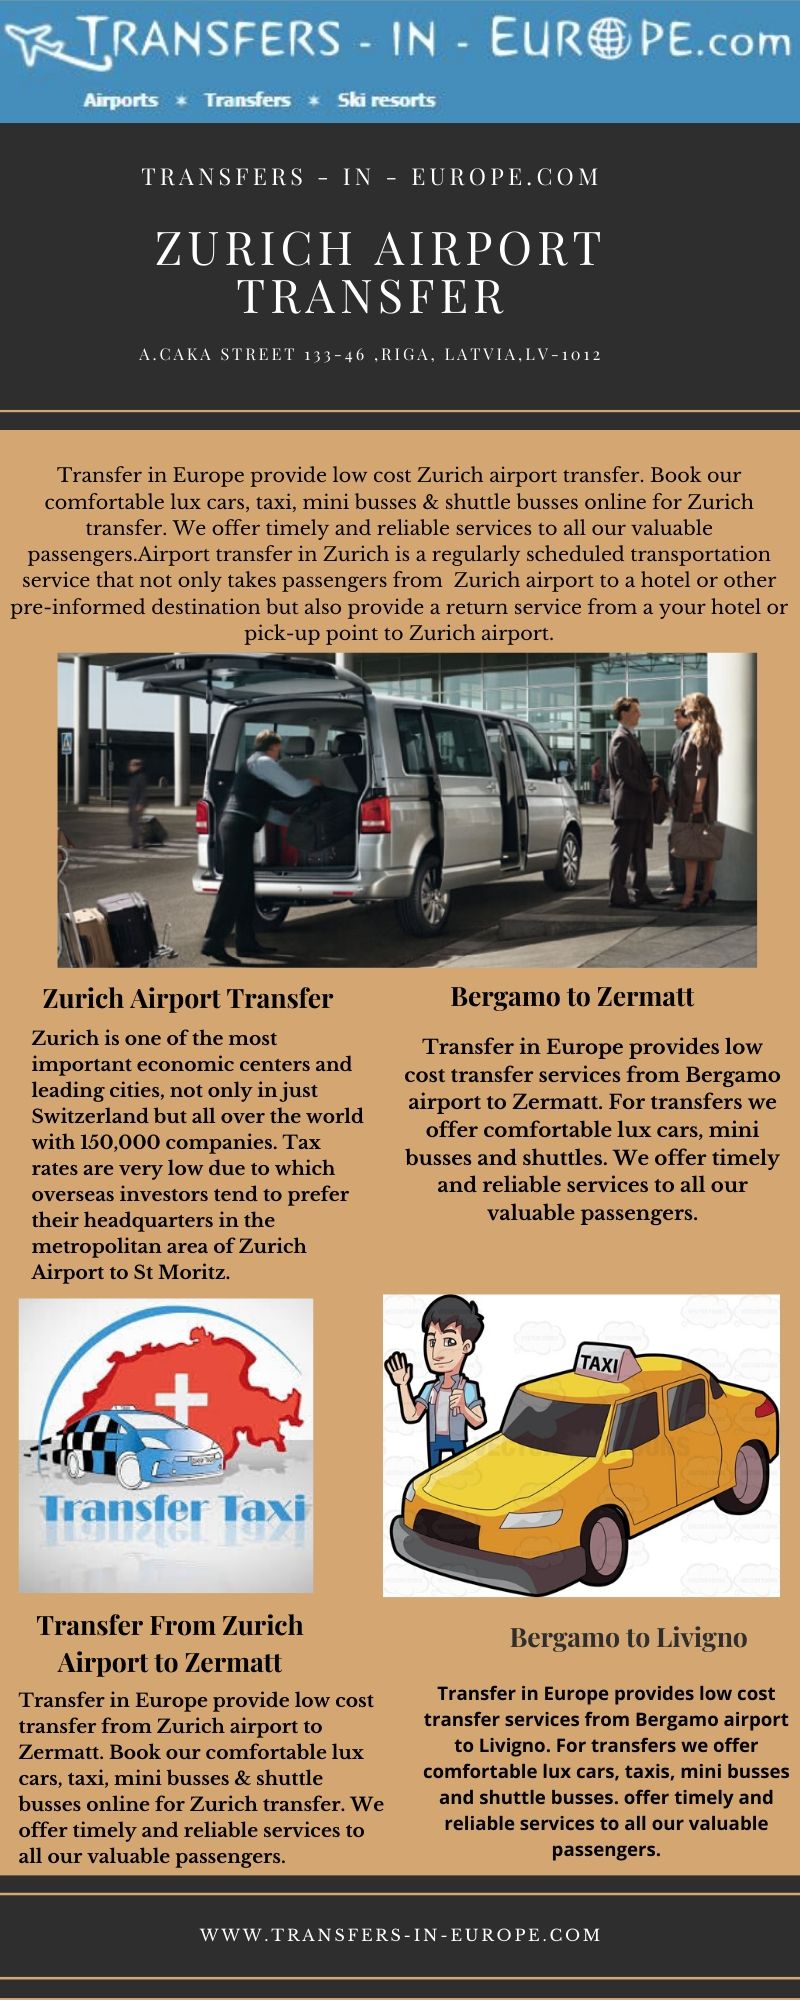 Zurich Airport Transfer.jpg  by transfersineurope